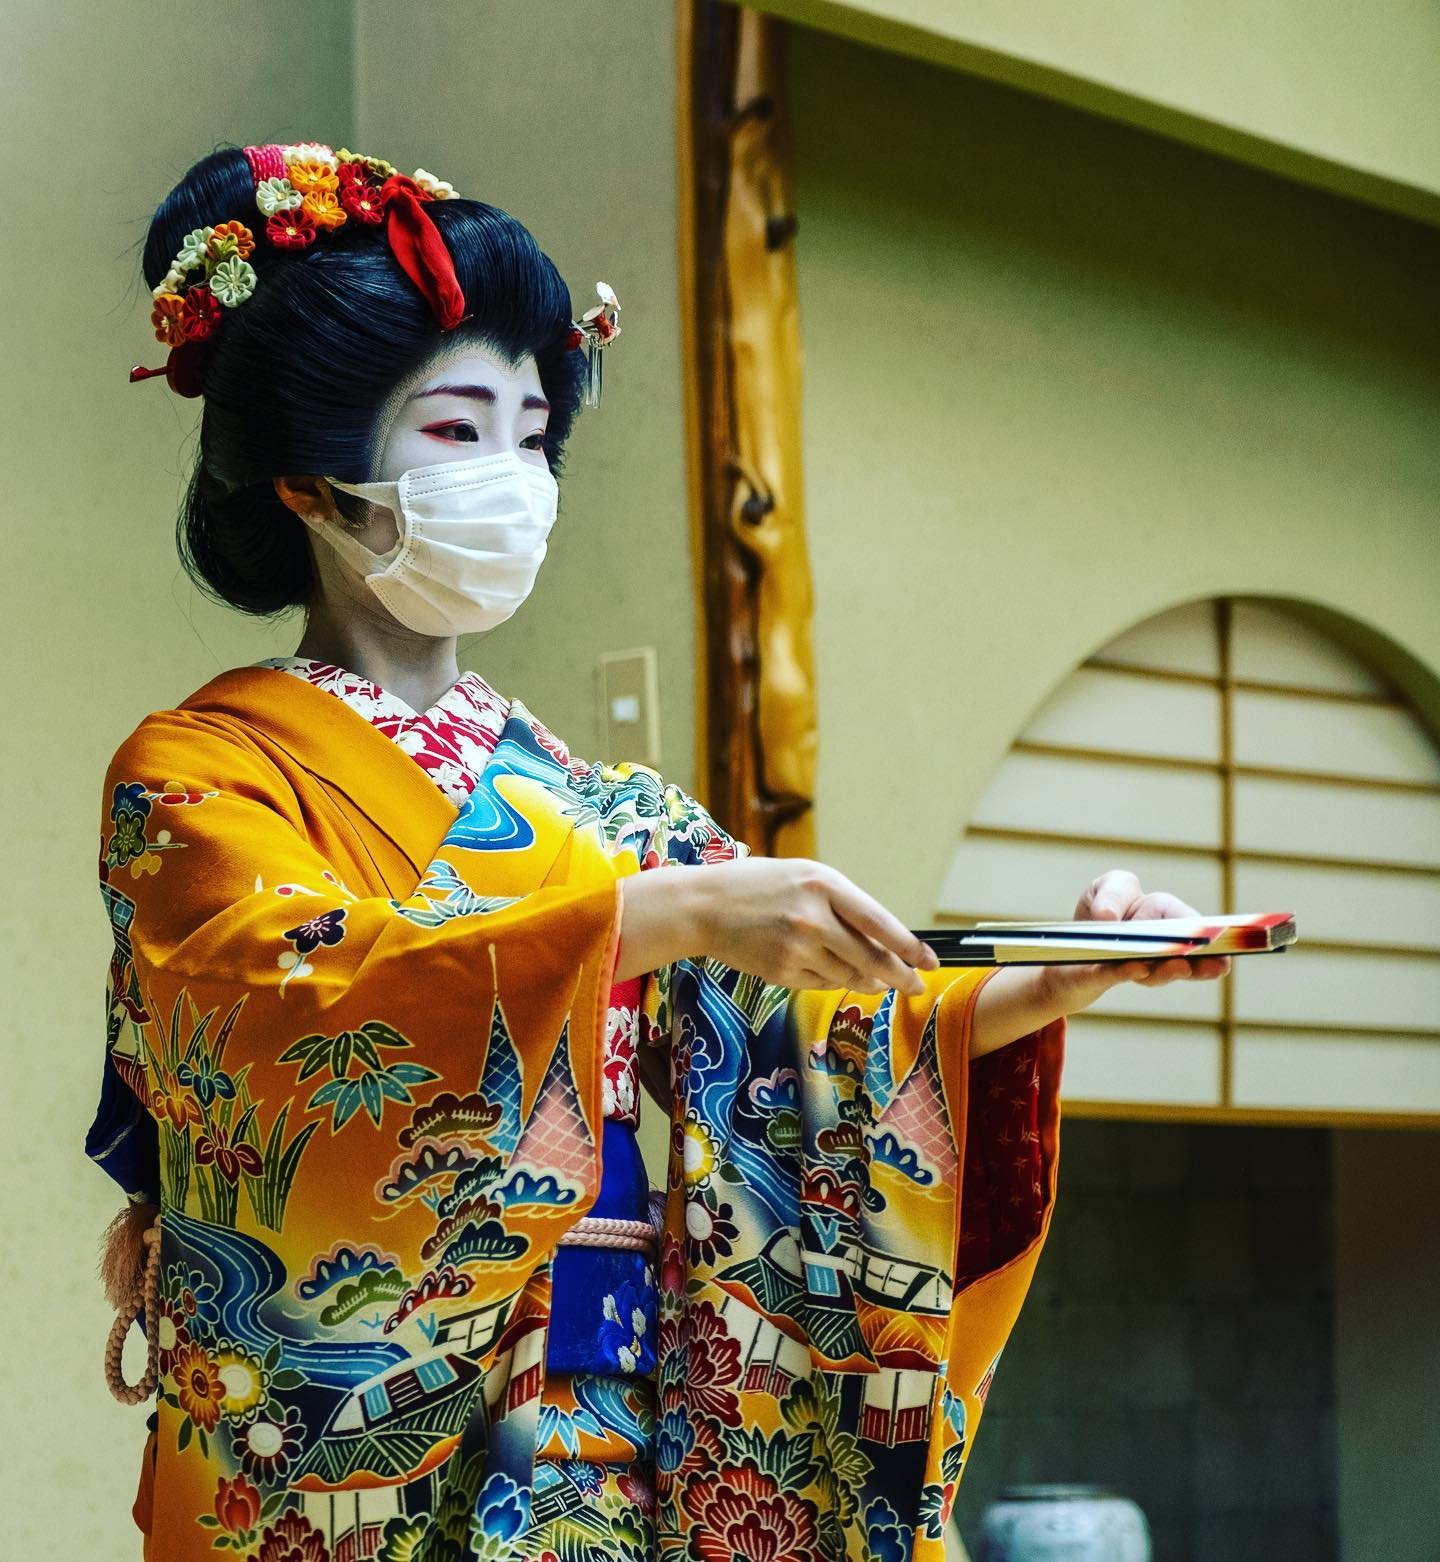 Niigata Geigi (Geisha) - part of @sake_tours Niigata tour 

#japantravelguide #discovertokyo #japanawaits #tokyophotographer #japanrevealed #japantours #explorejpn #lovers_nippon #explorejapan #bestjapanpics #japan_of_insta #photo_jpn #cinematicmodeo